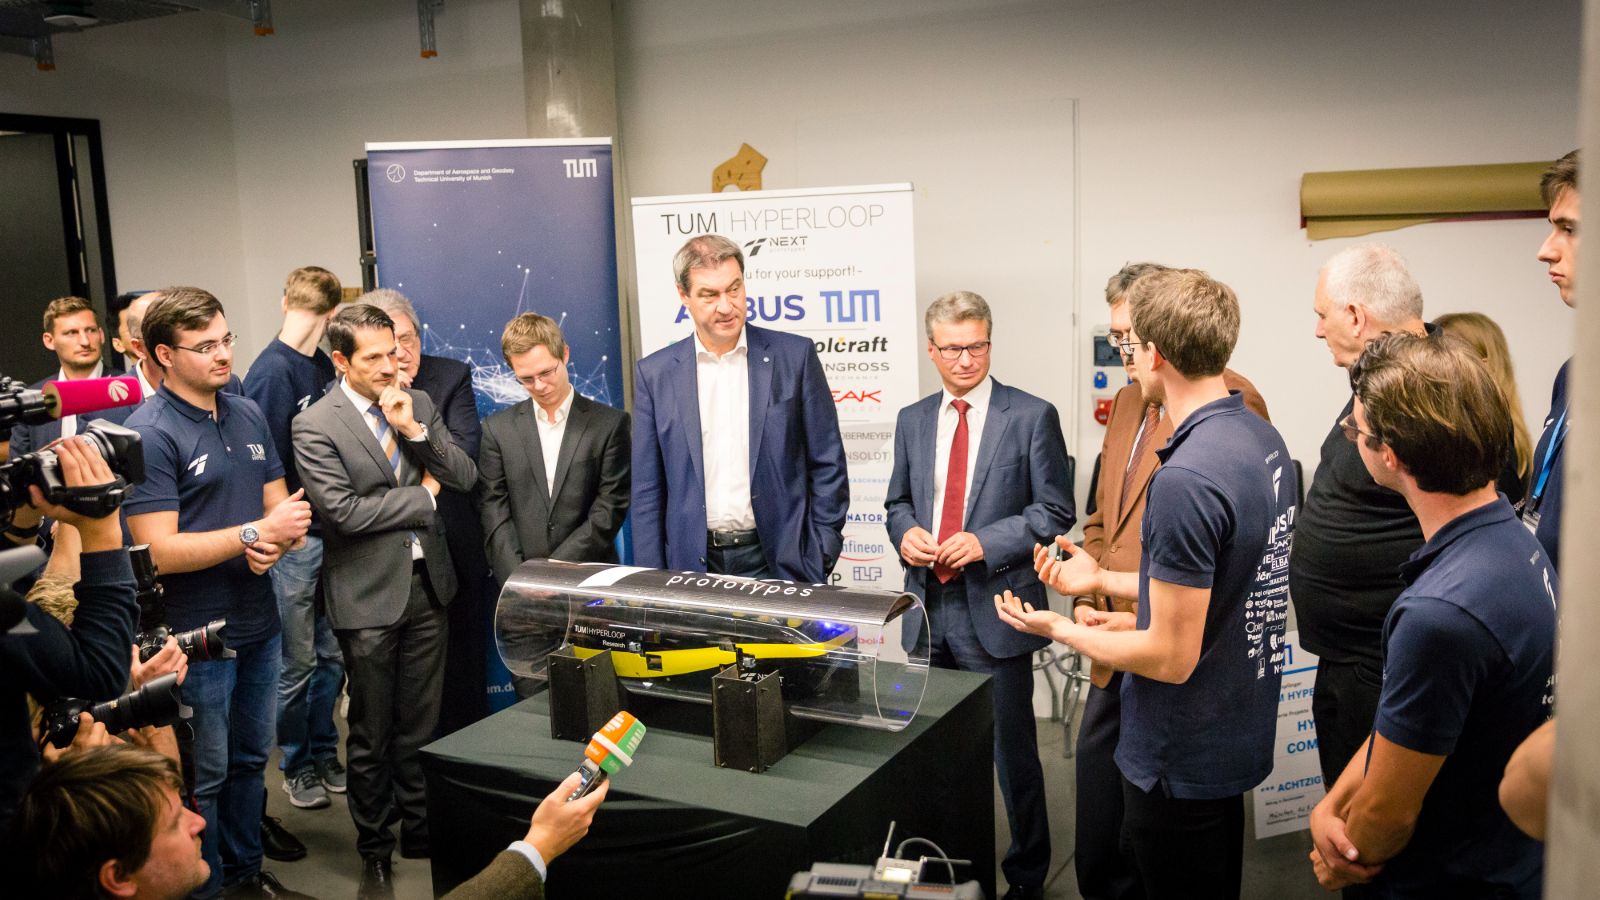 Markus Söder, Minister-President of Bavaria, with the TUM Hyperloop team